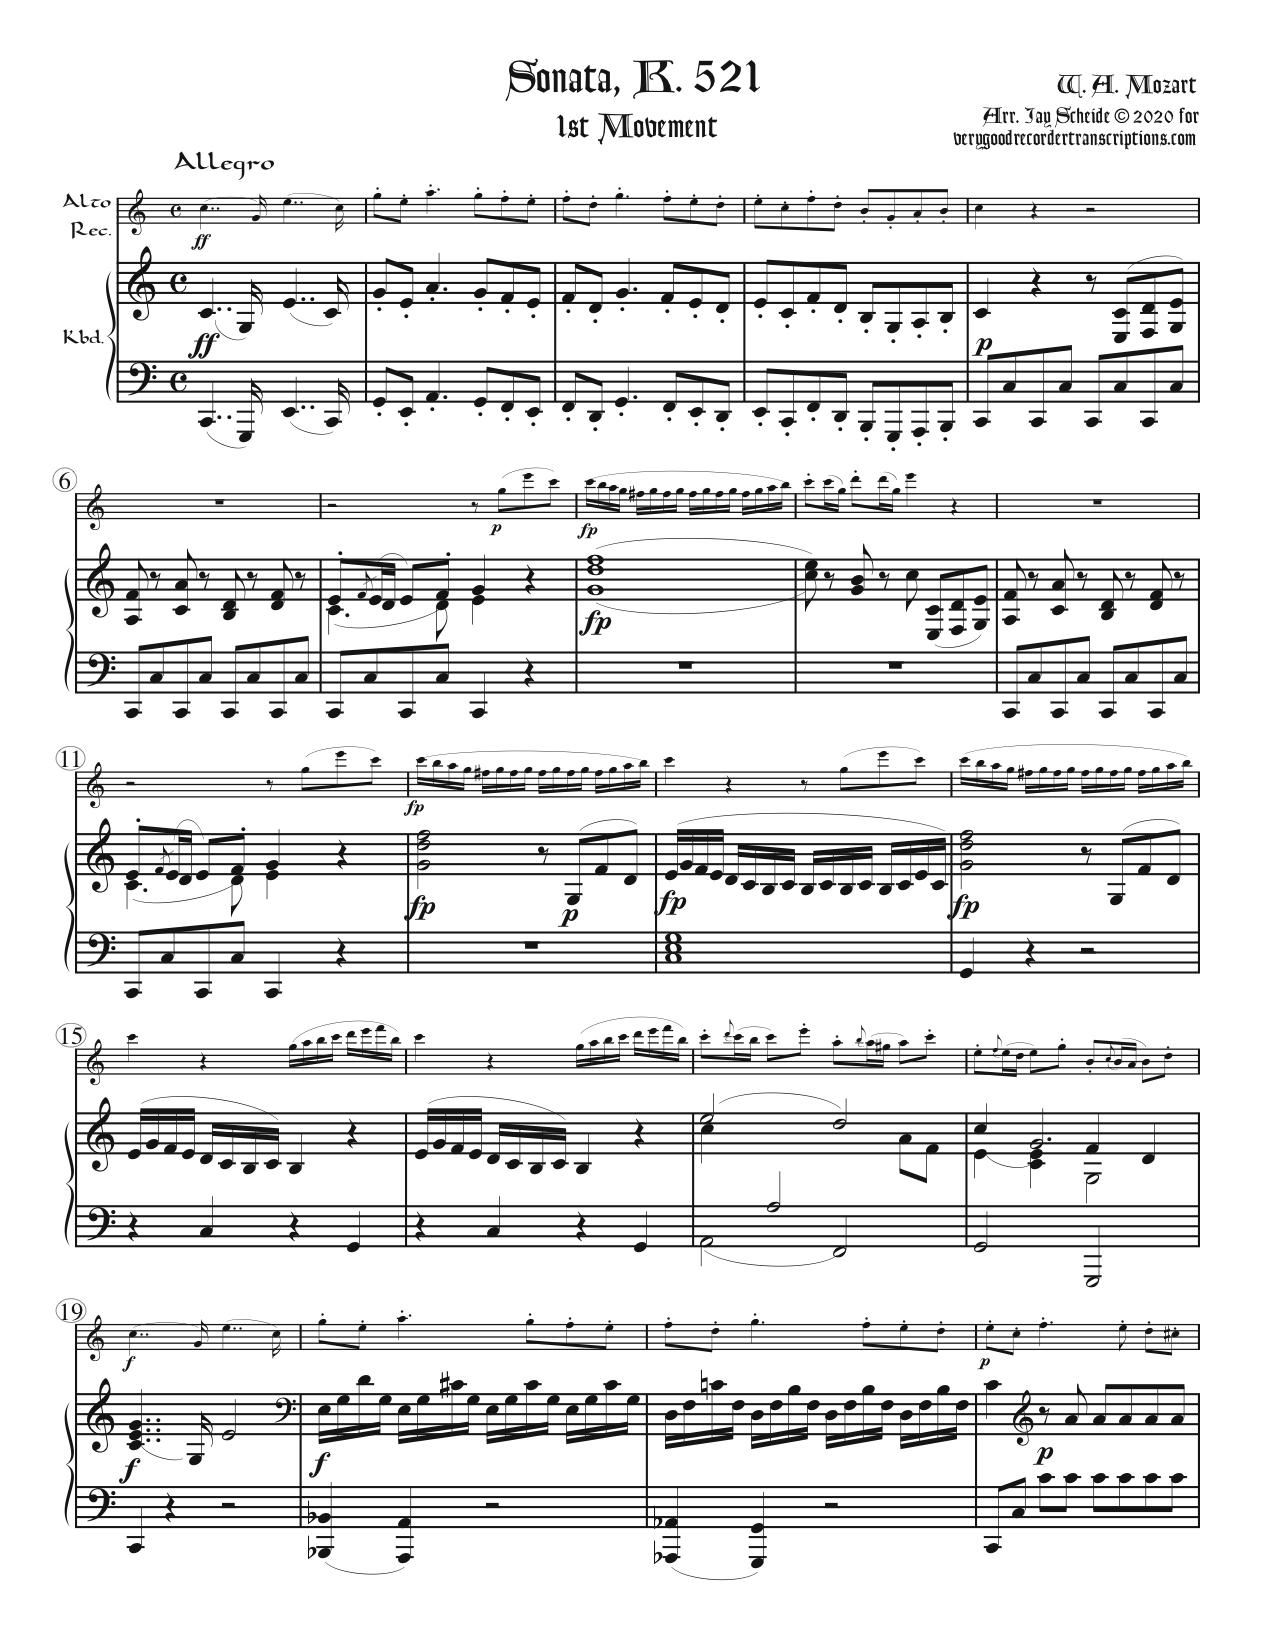 1st movement from Sonata, K. 521